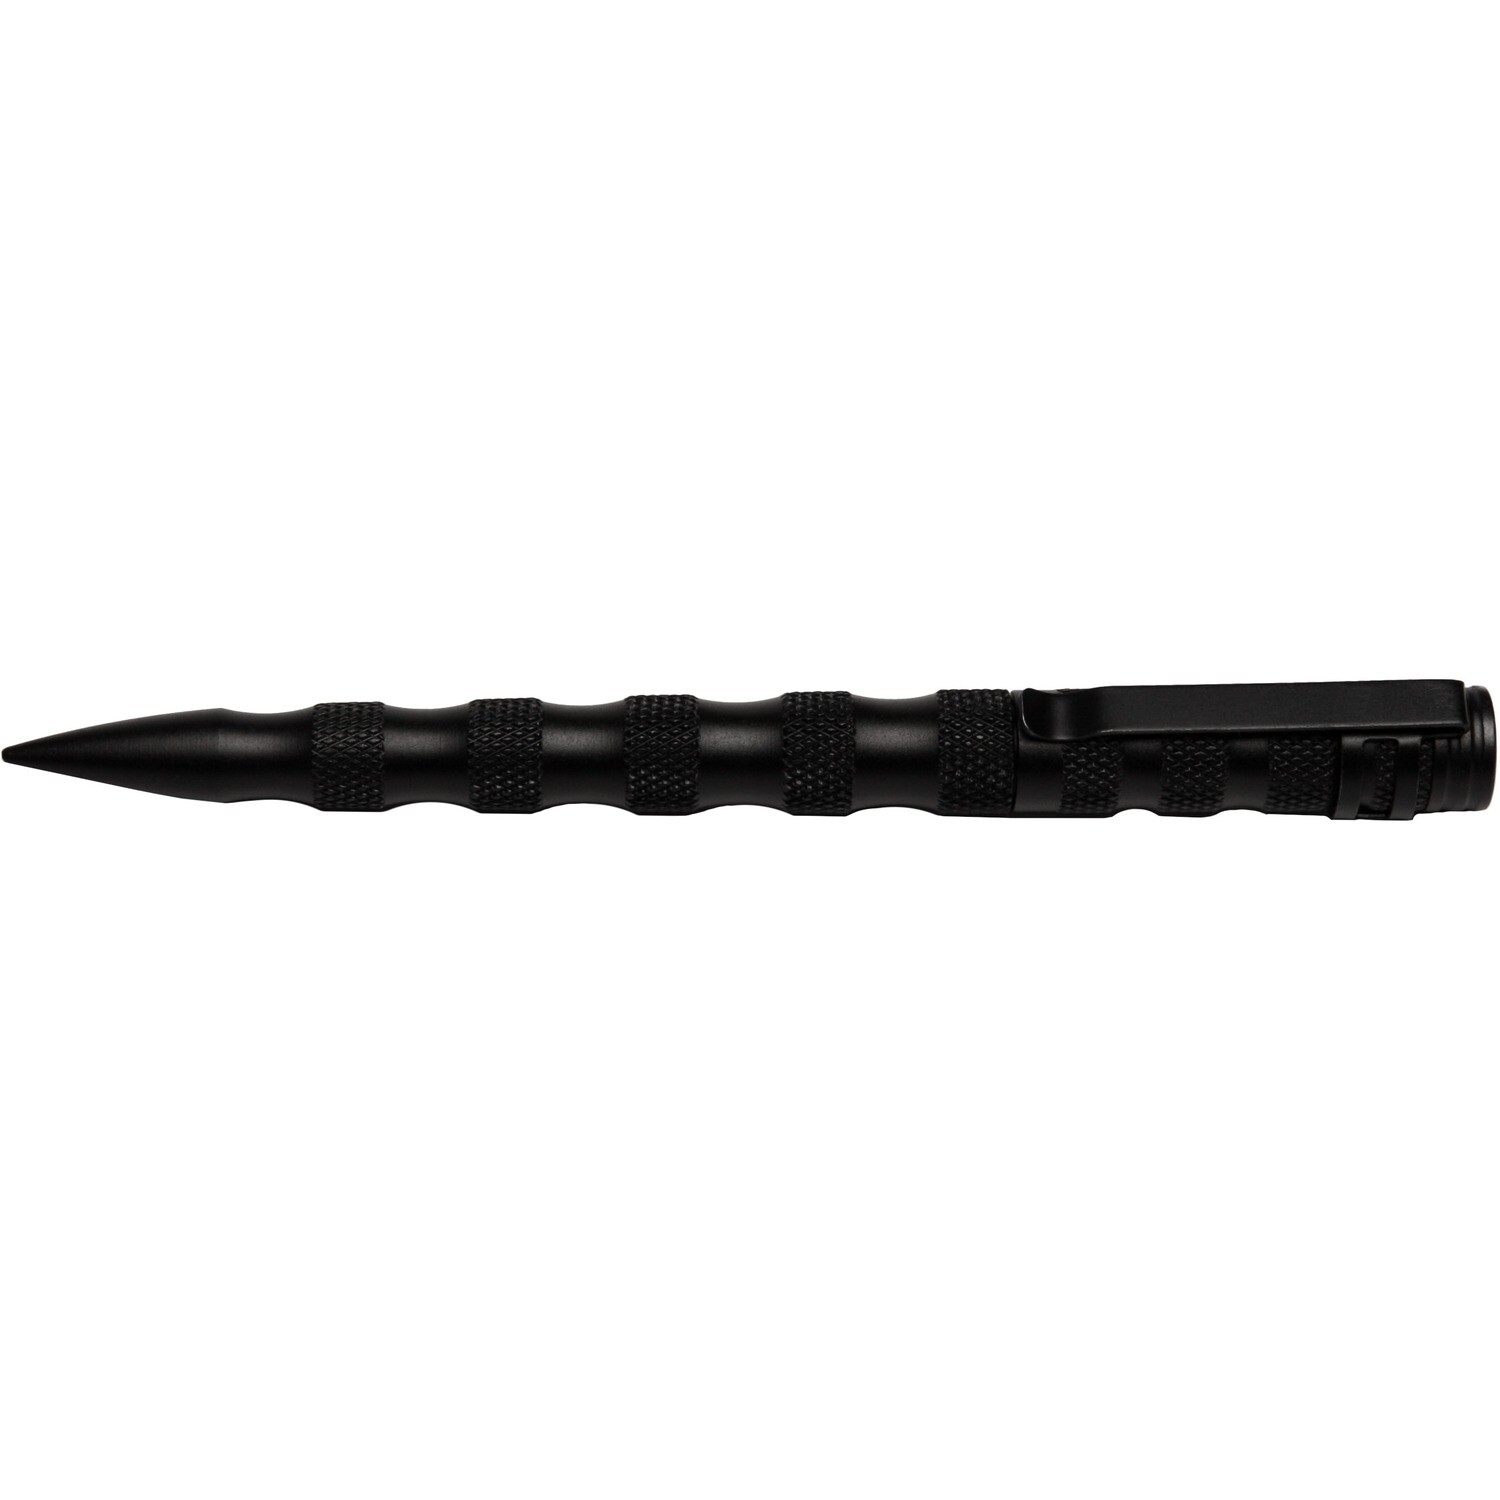 Tacpen11-BK, UZI, Tactical Pen w/Striking Point, Black